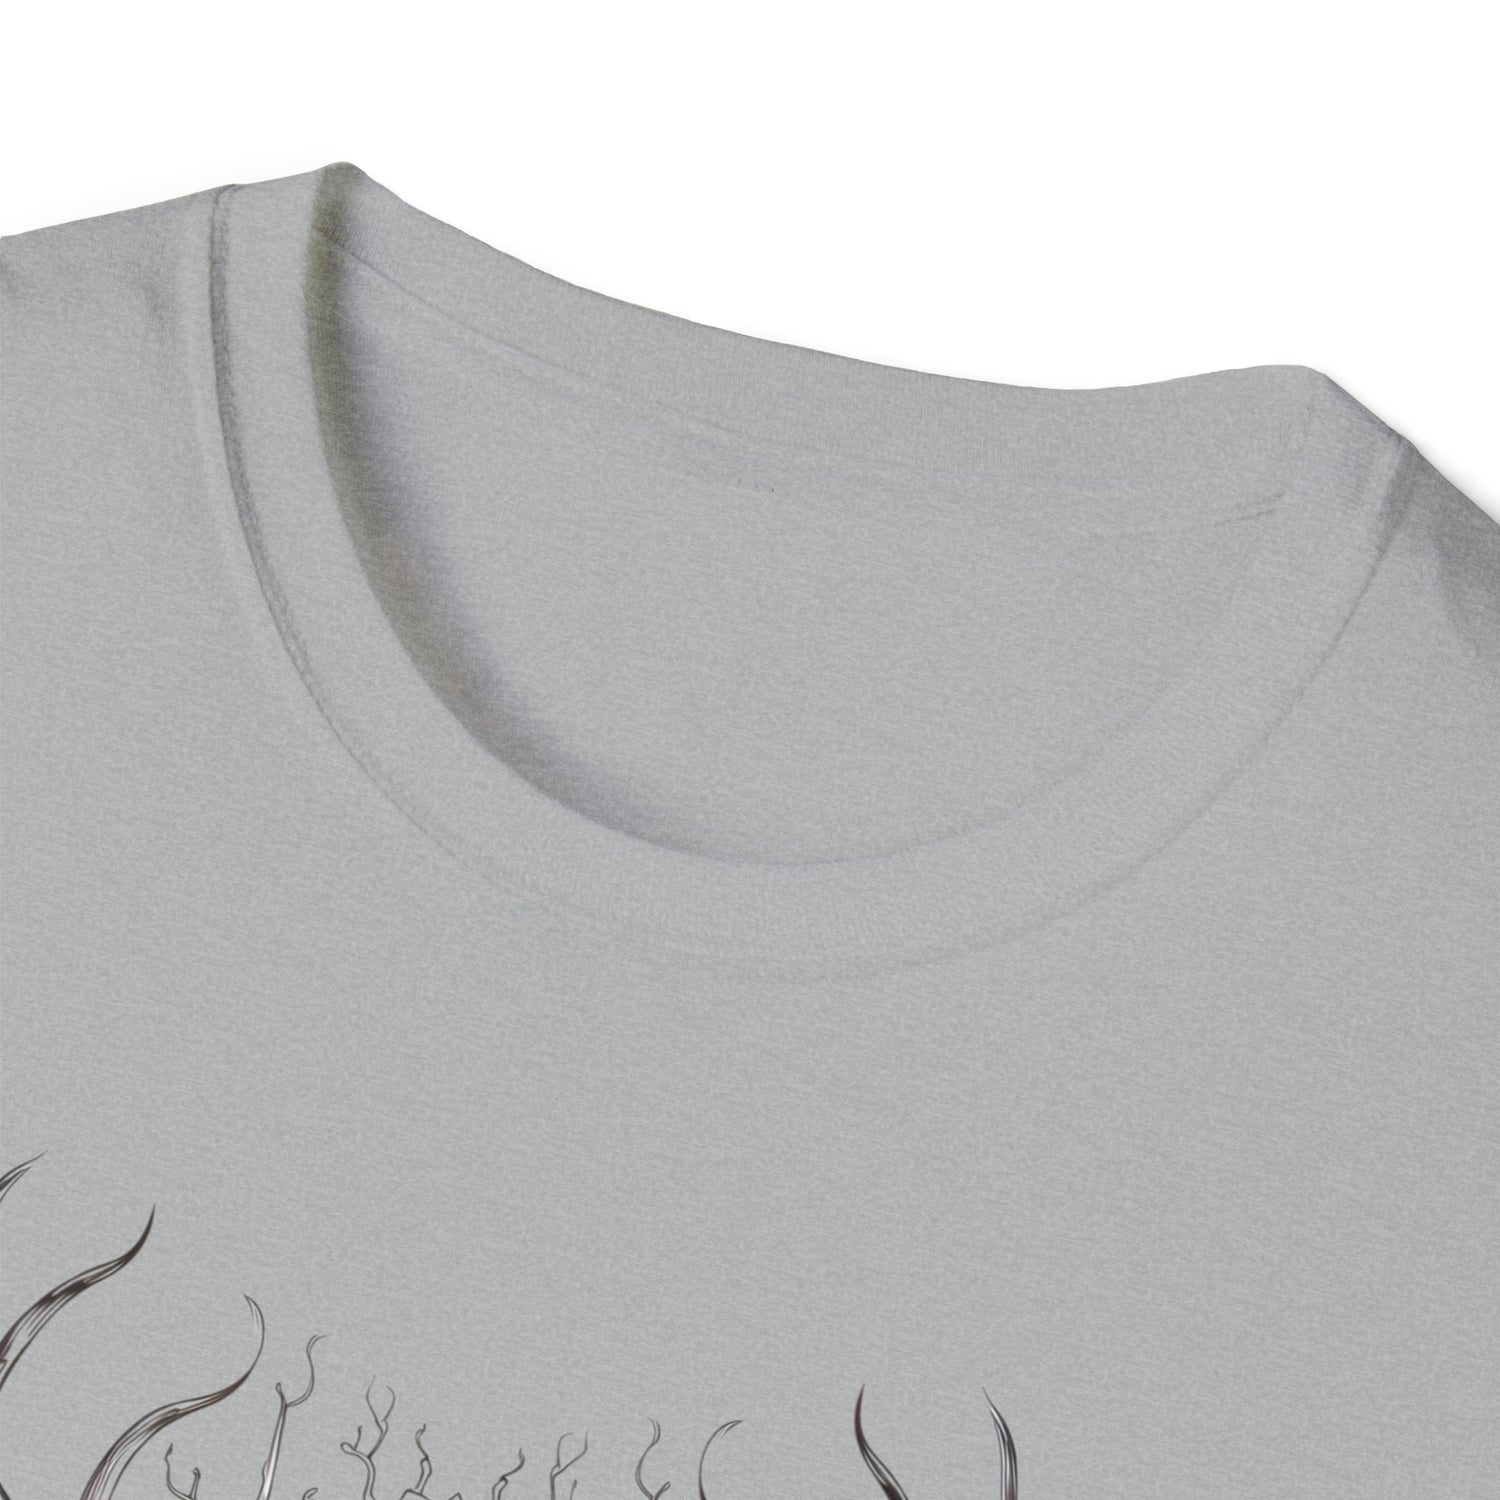 Spiritual Antler Deer Minimalistic T-Shirt, - CosmicDeva